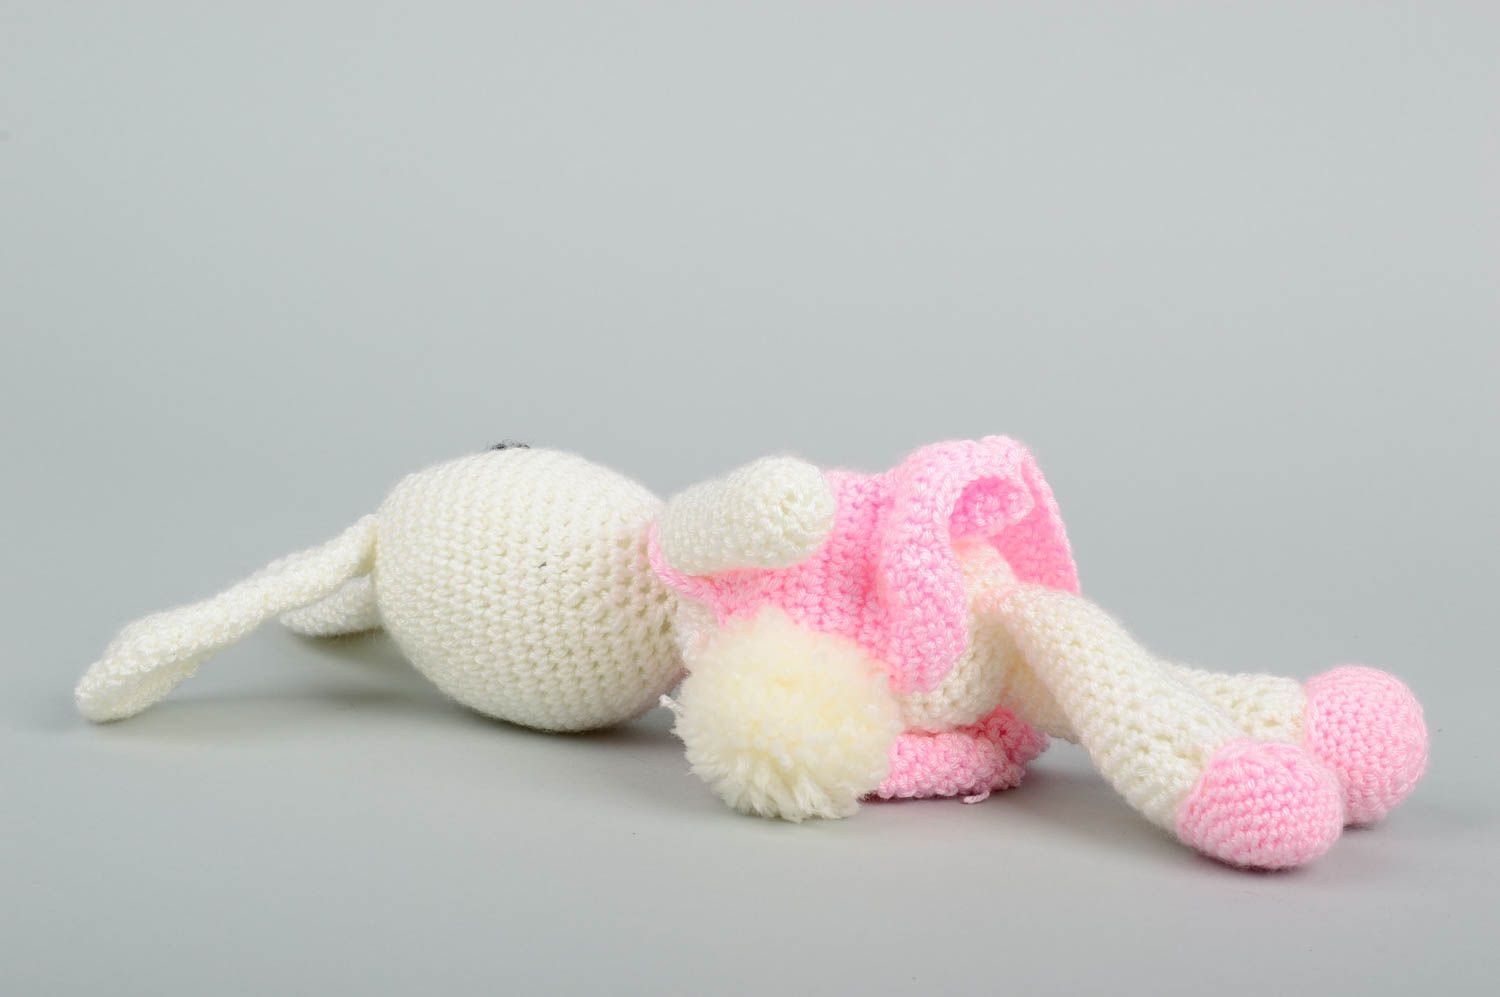 Beautiful handmade crochet soft toy childrens toys nursery design gift ideas photo 3